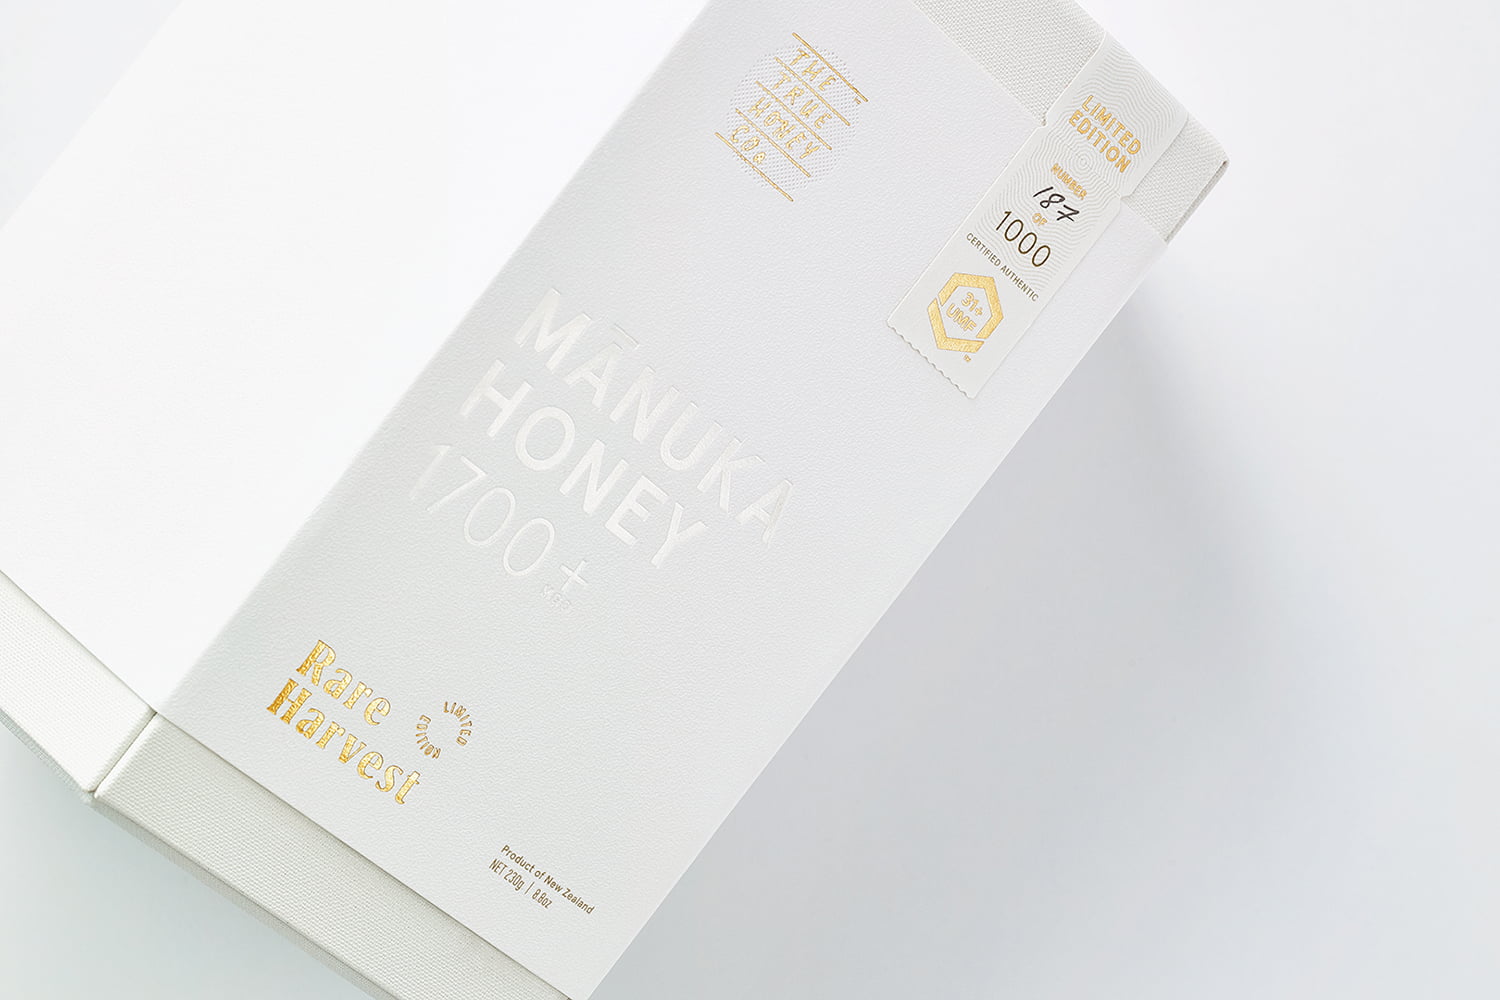 22 rare harvest the true honey company packaging design marx design new zealand bpo